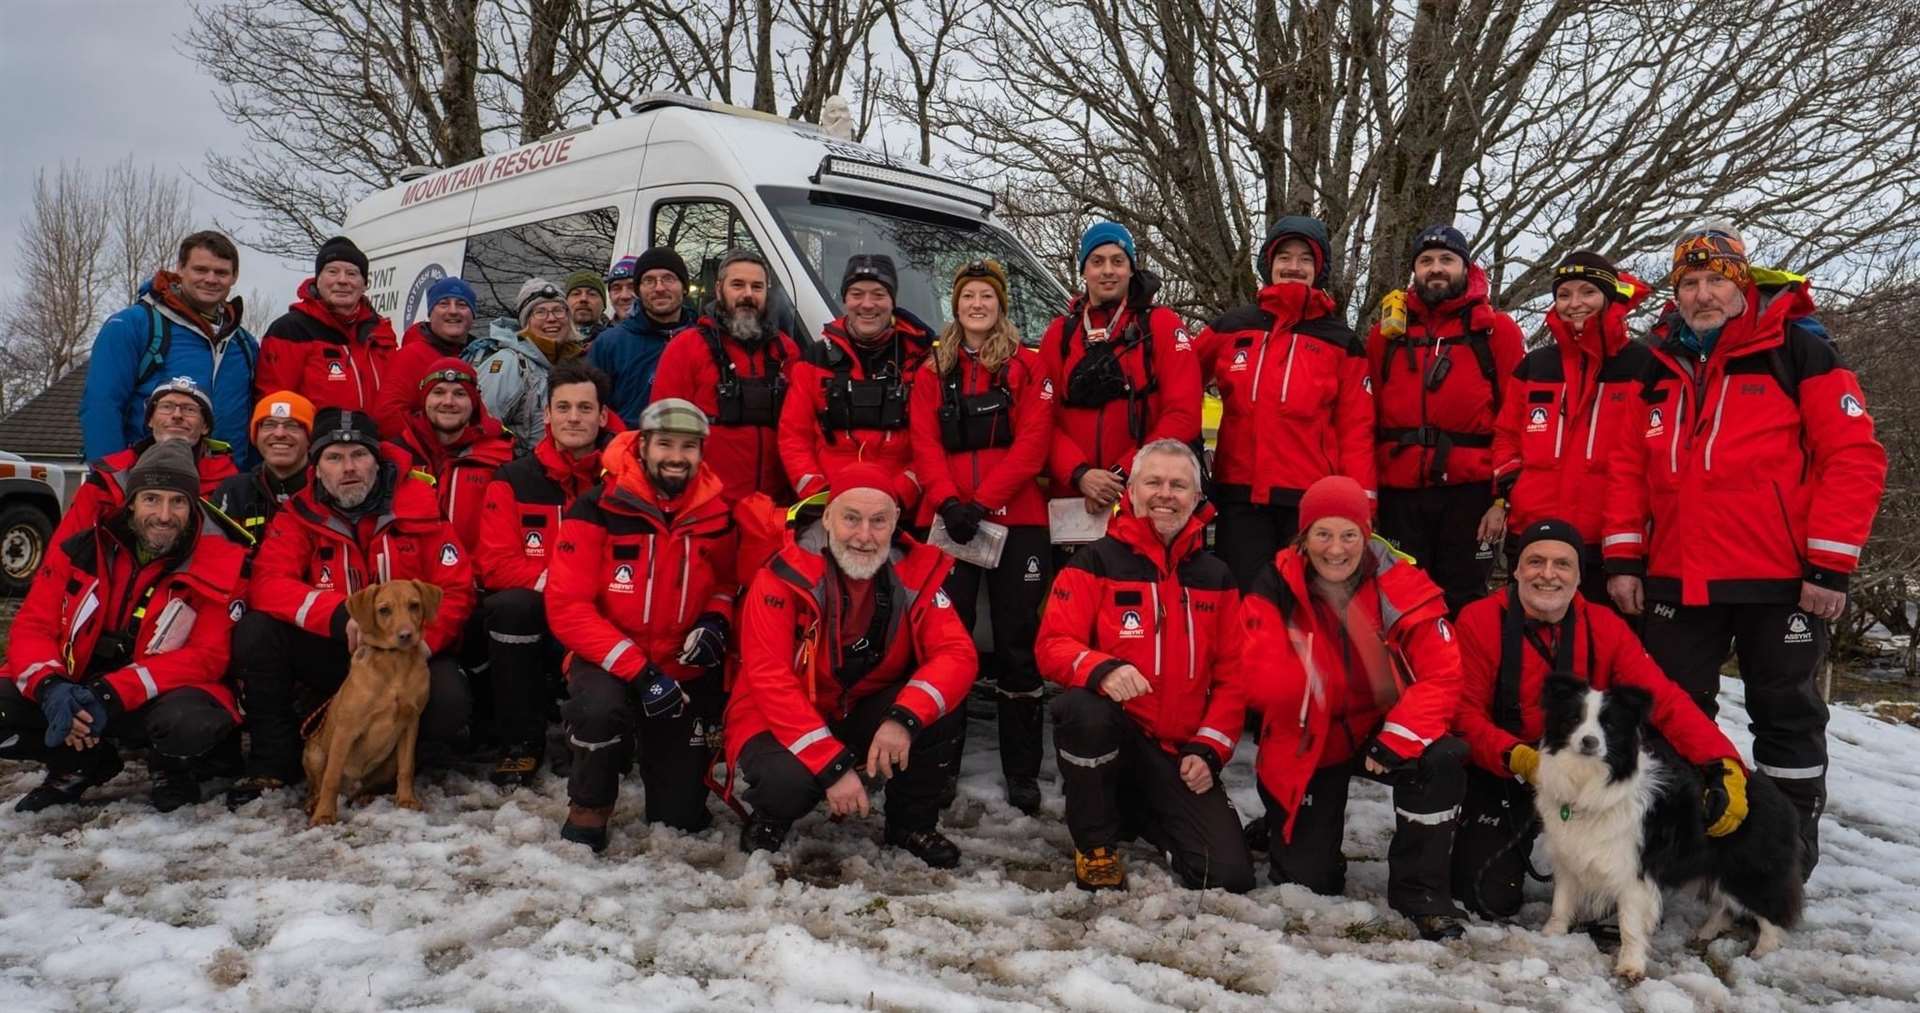 The Assynt Mountain Rescue Team.